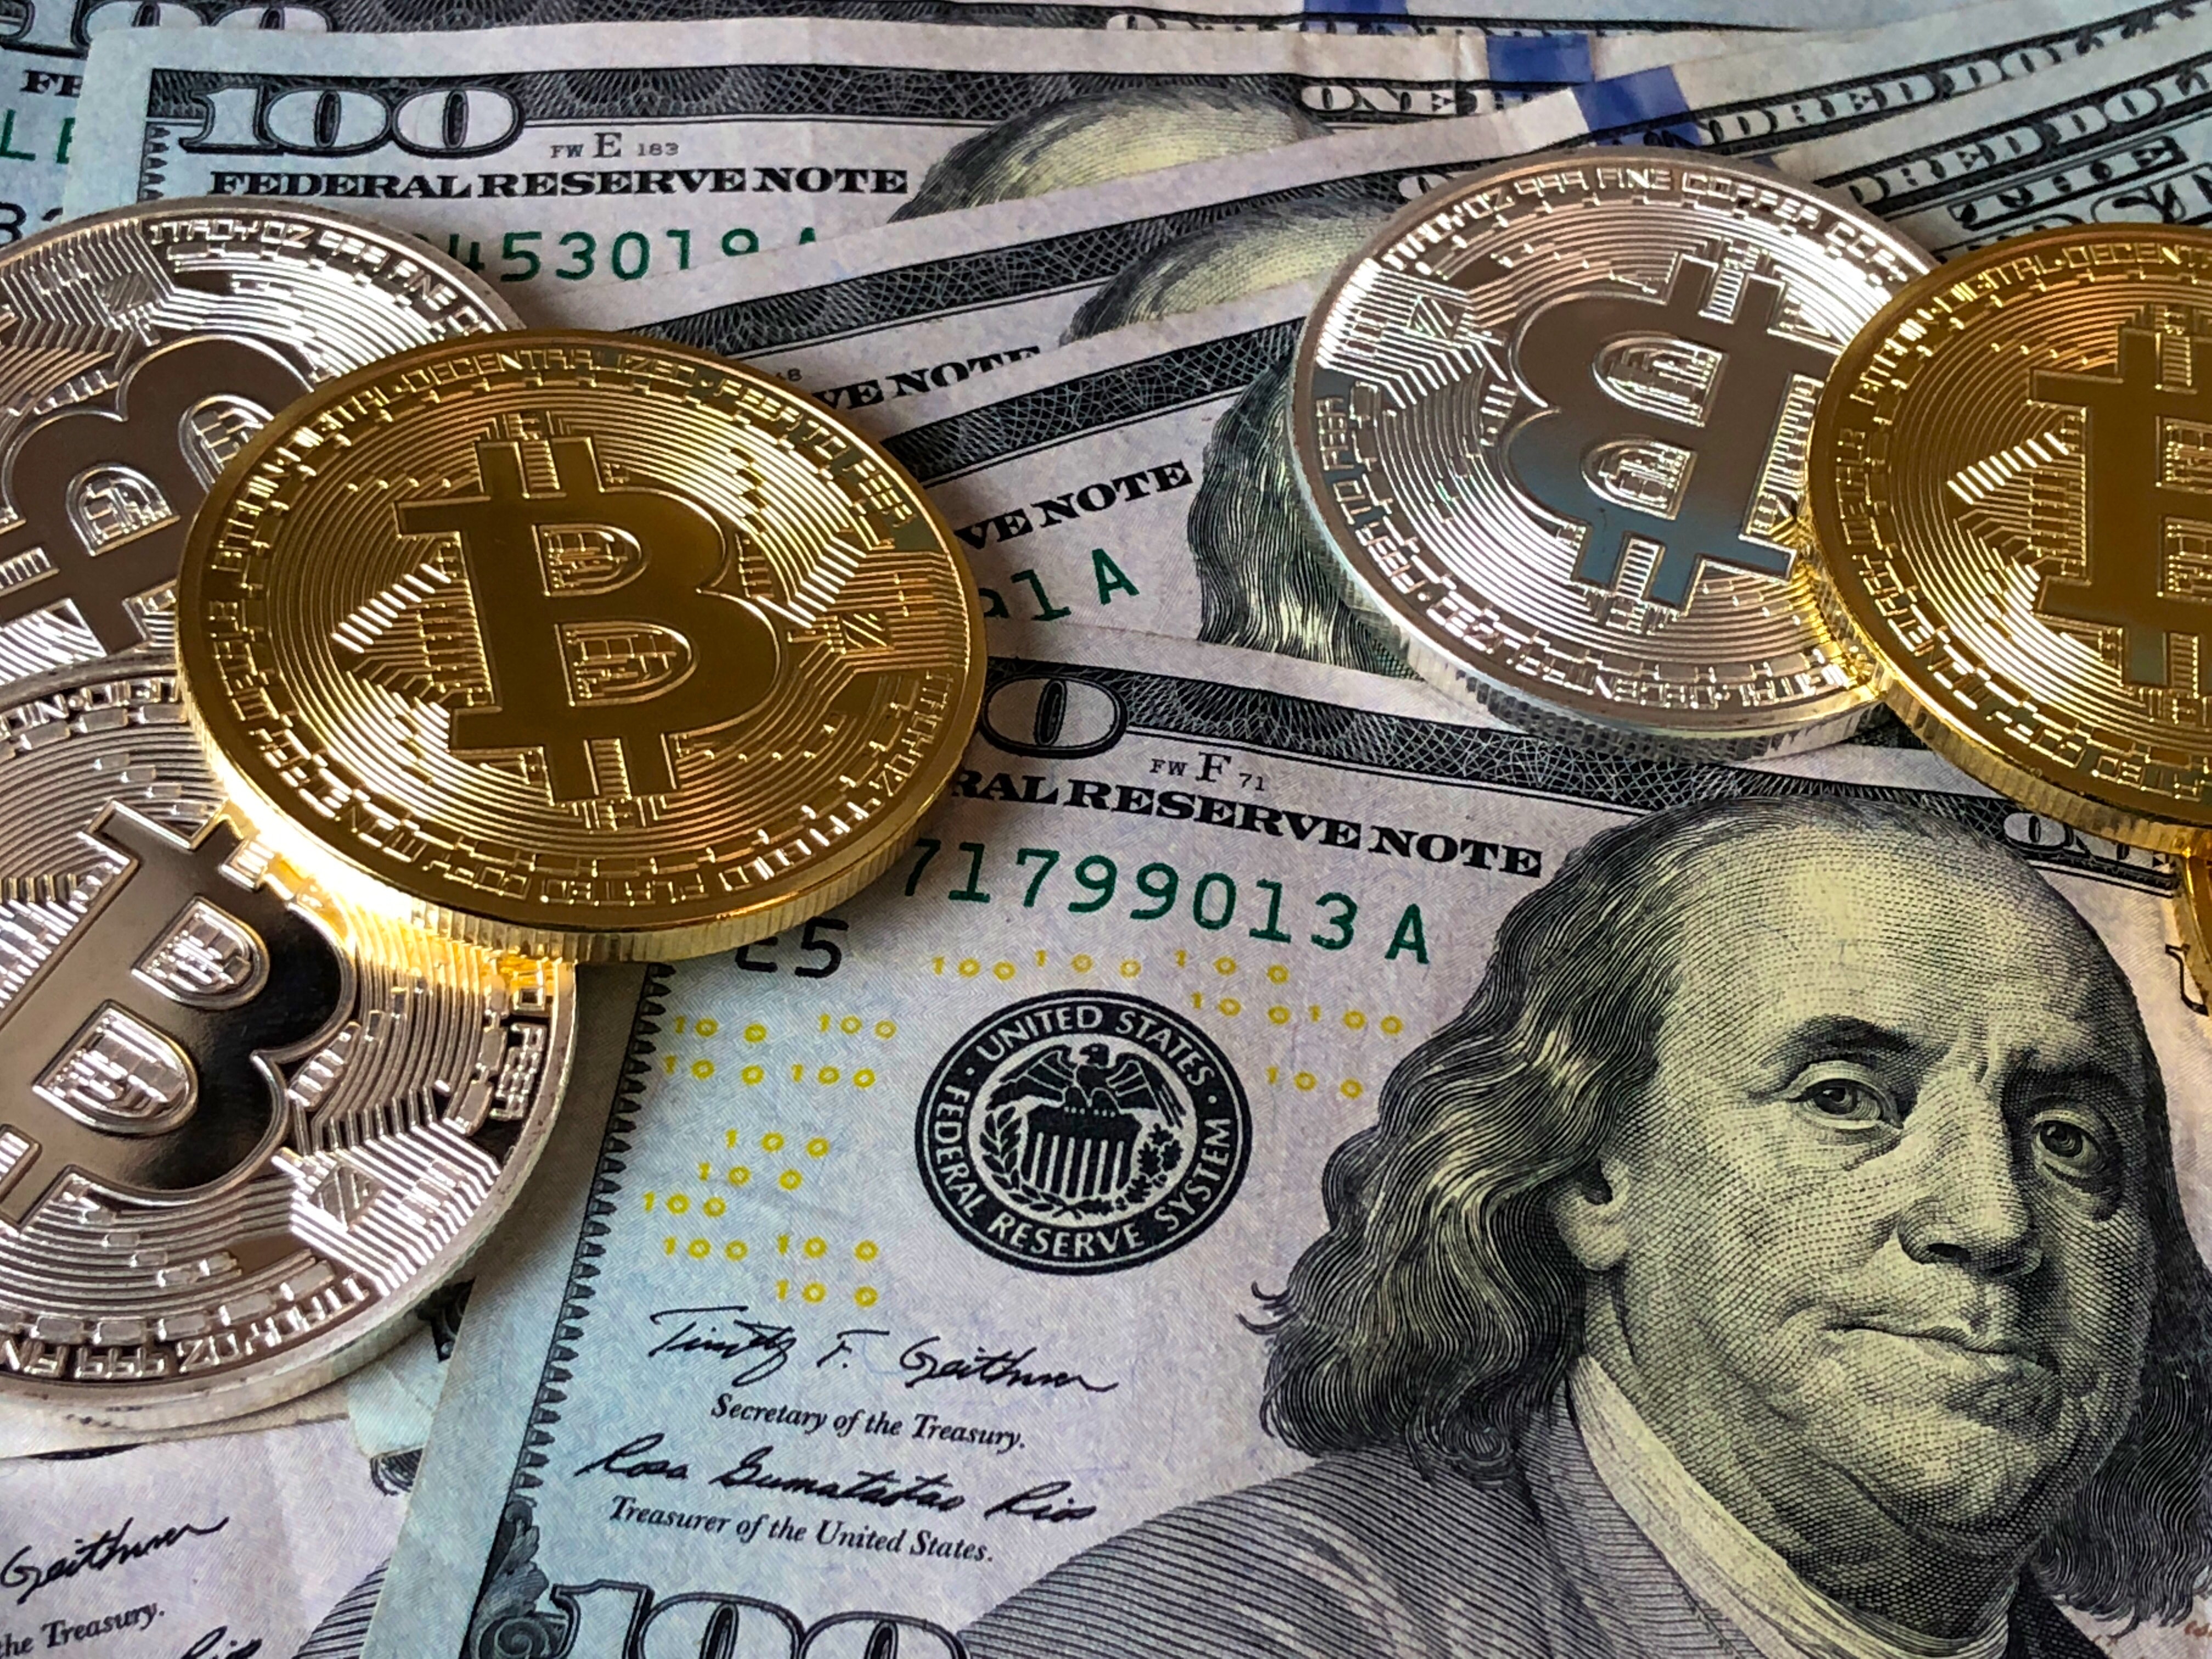 stock photo of bitcoins and U.S. dollar bills